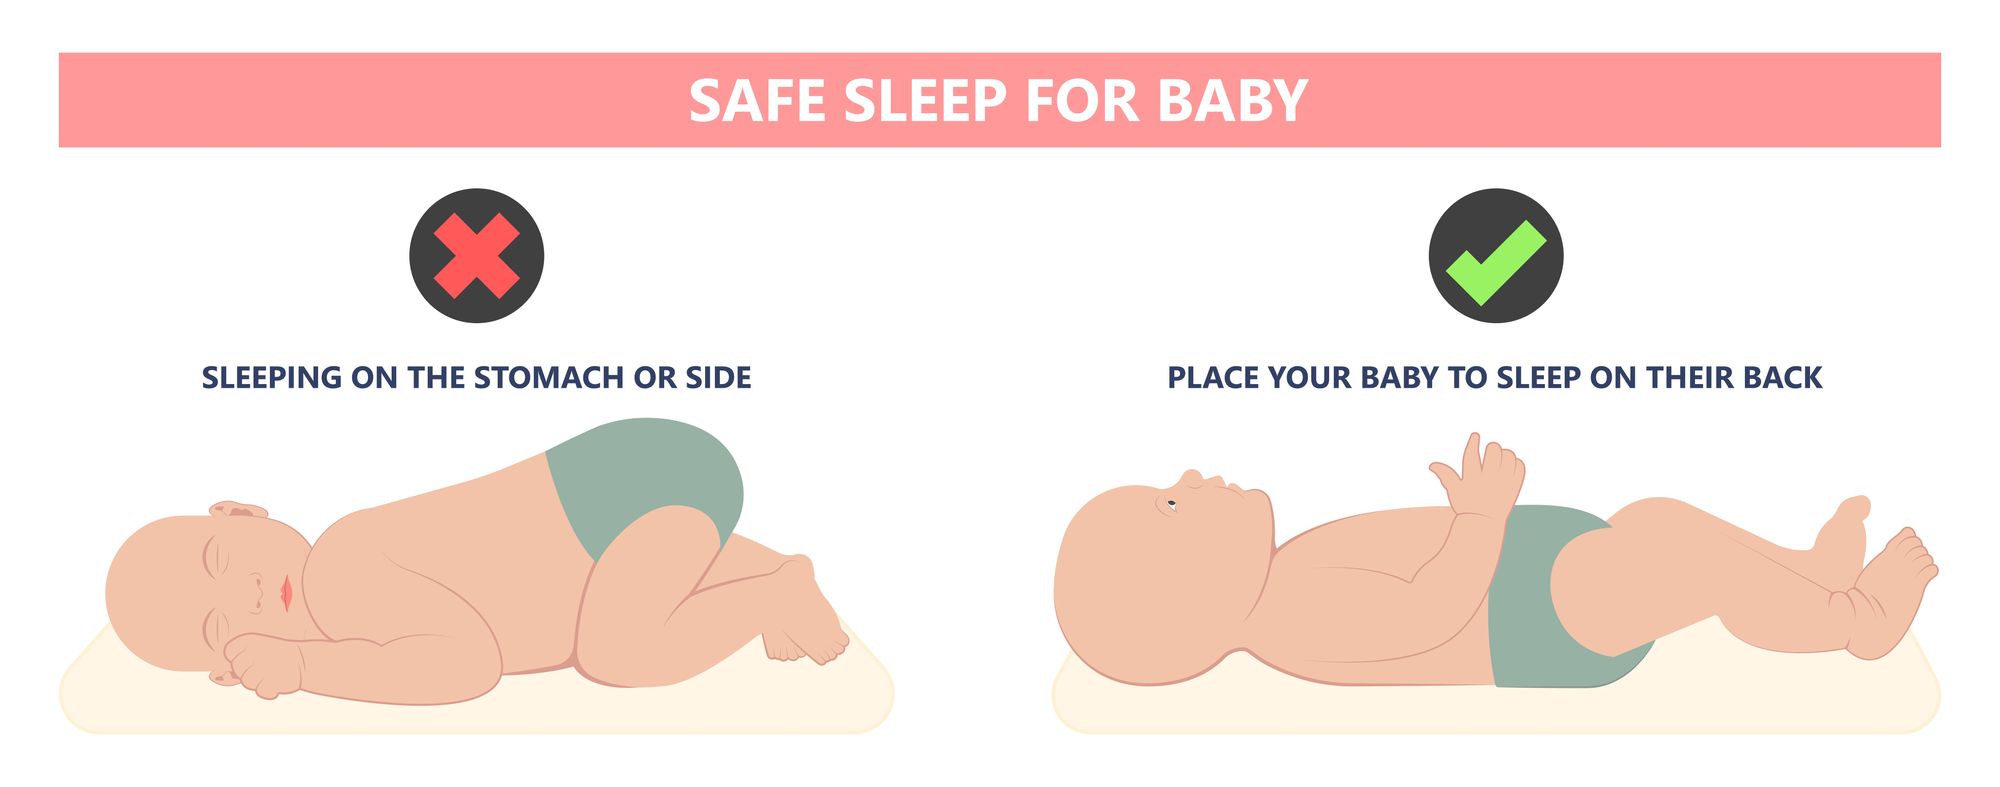 Safe sleep position for babies By rumruay | www.shutterstock.com